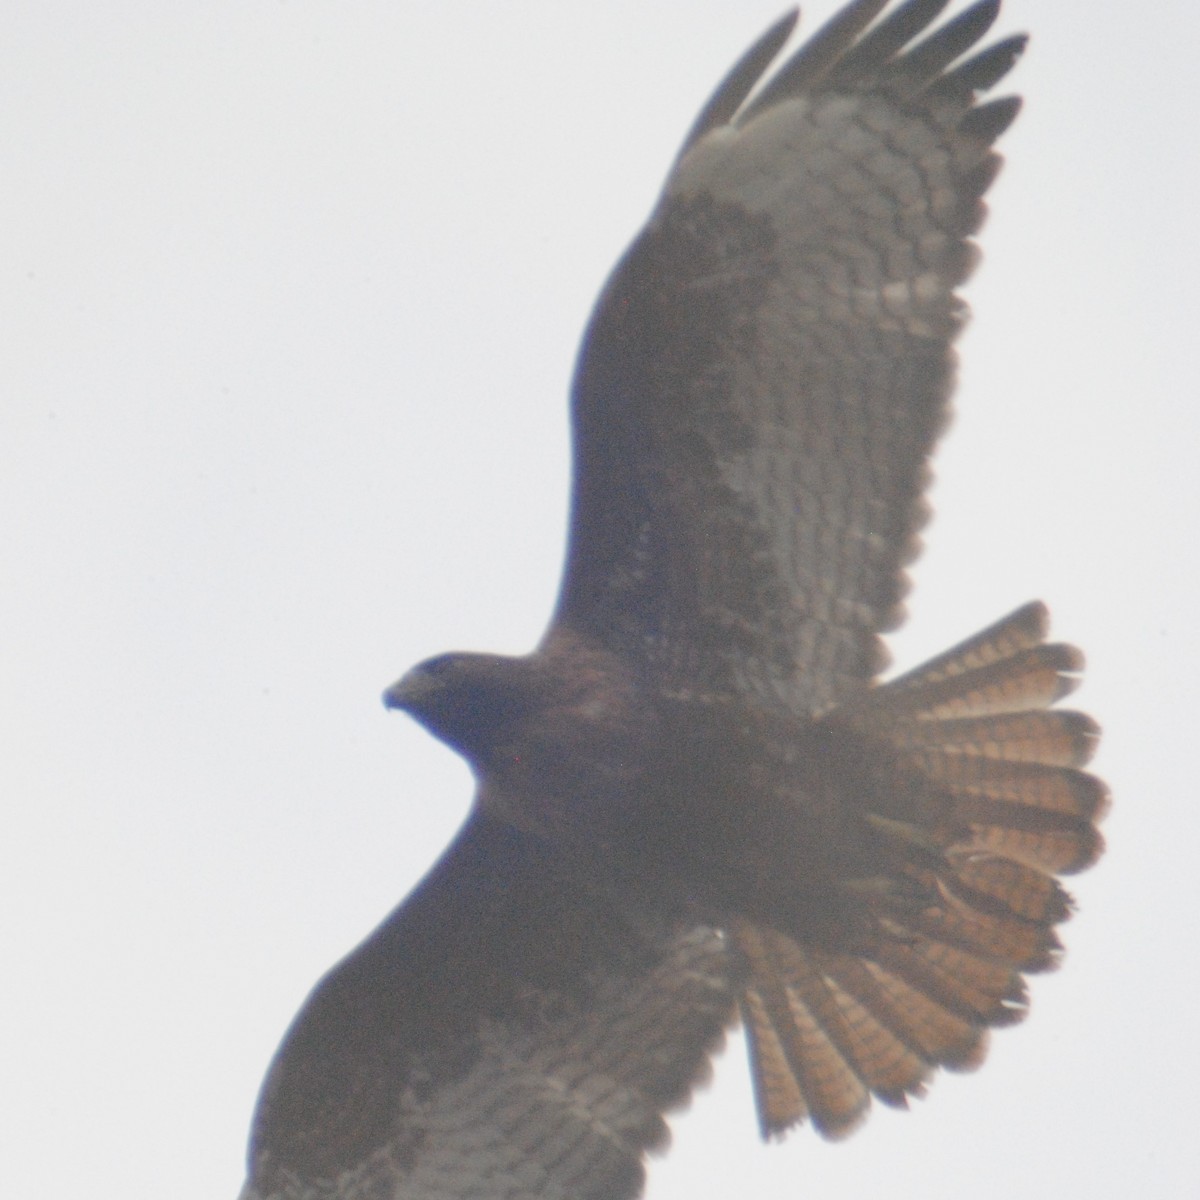 Red-tailed Hawk (calurus/alascensis) - Sean Cozart